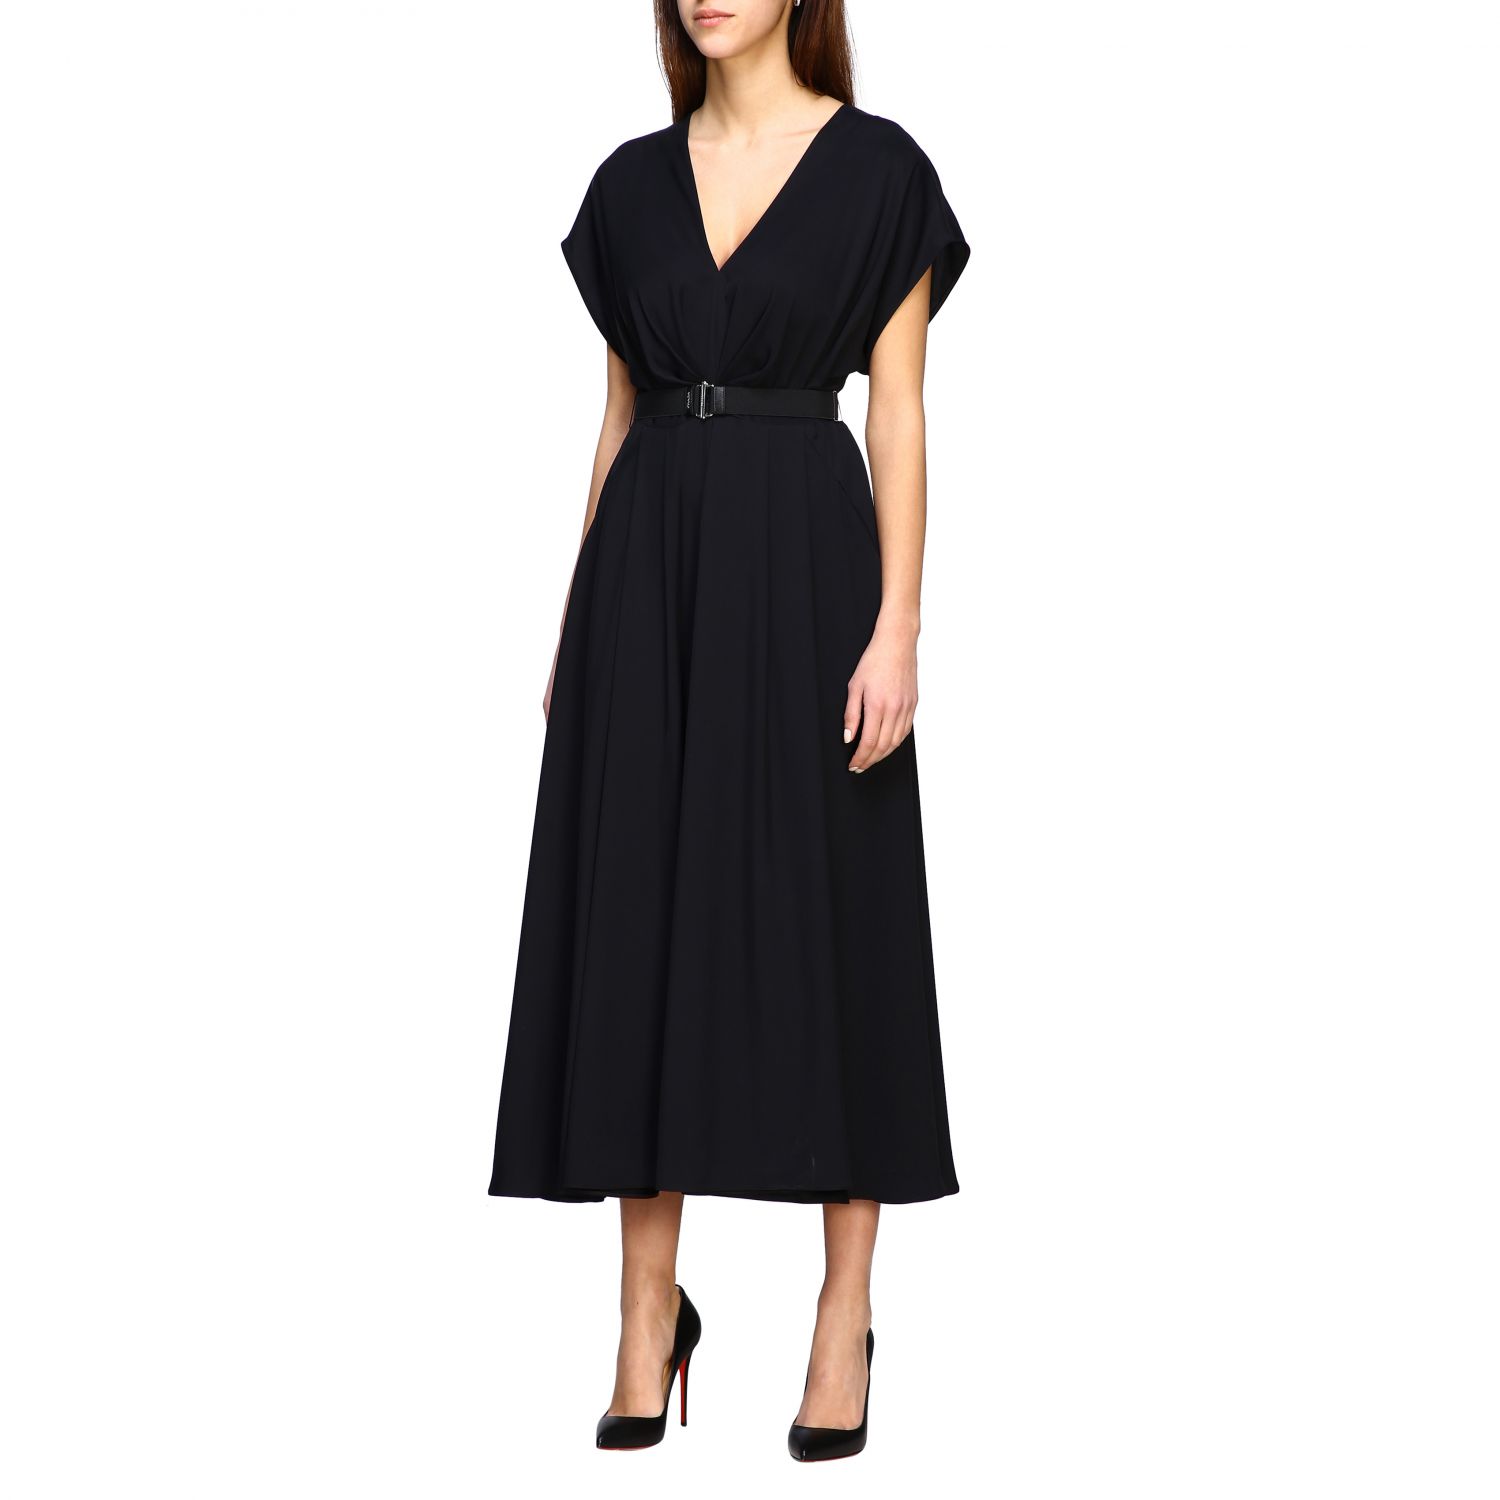 PRADA: Long dress in fluid twill with belt | Dress Prada Women Black ...